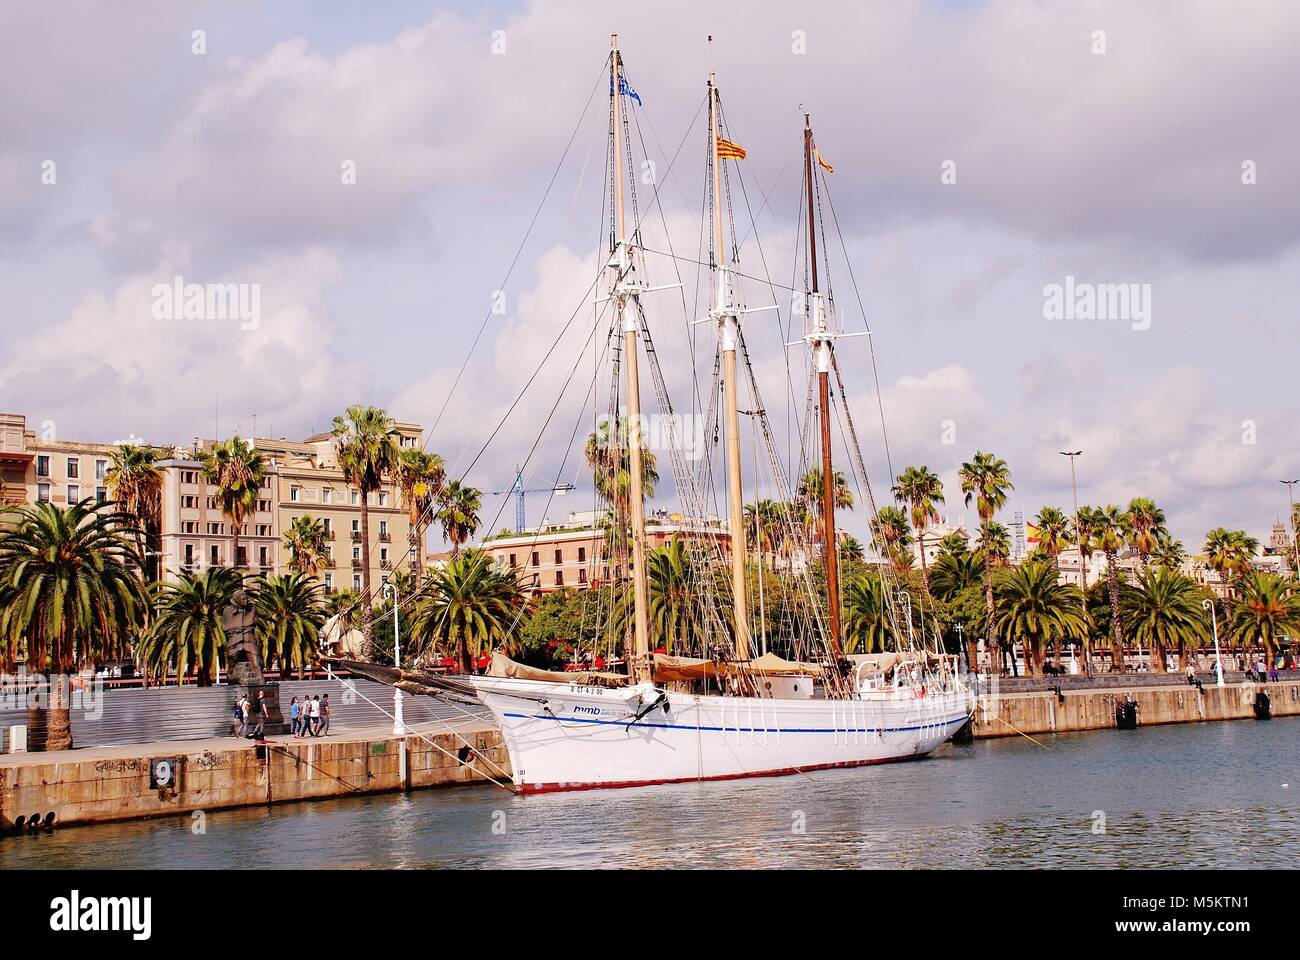 Vintage sailing boat Santa Eulalia moored in the marina at Port Vell in Barcelona, Spain on November 2, 2017. Stock Photo